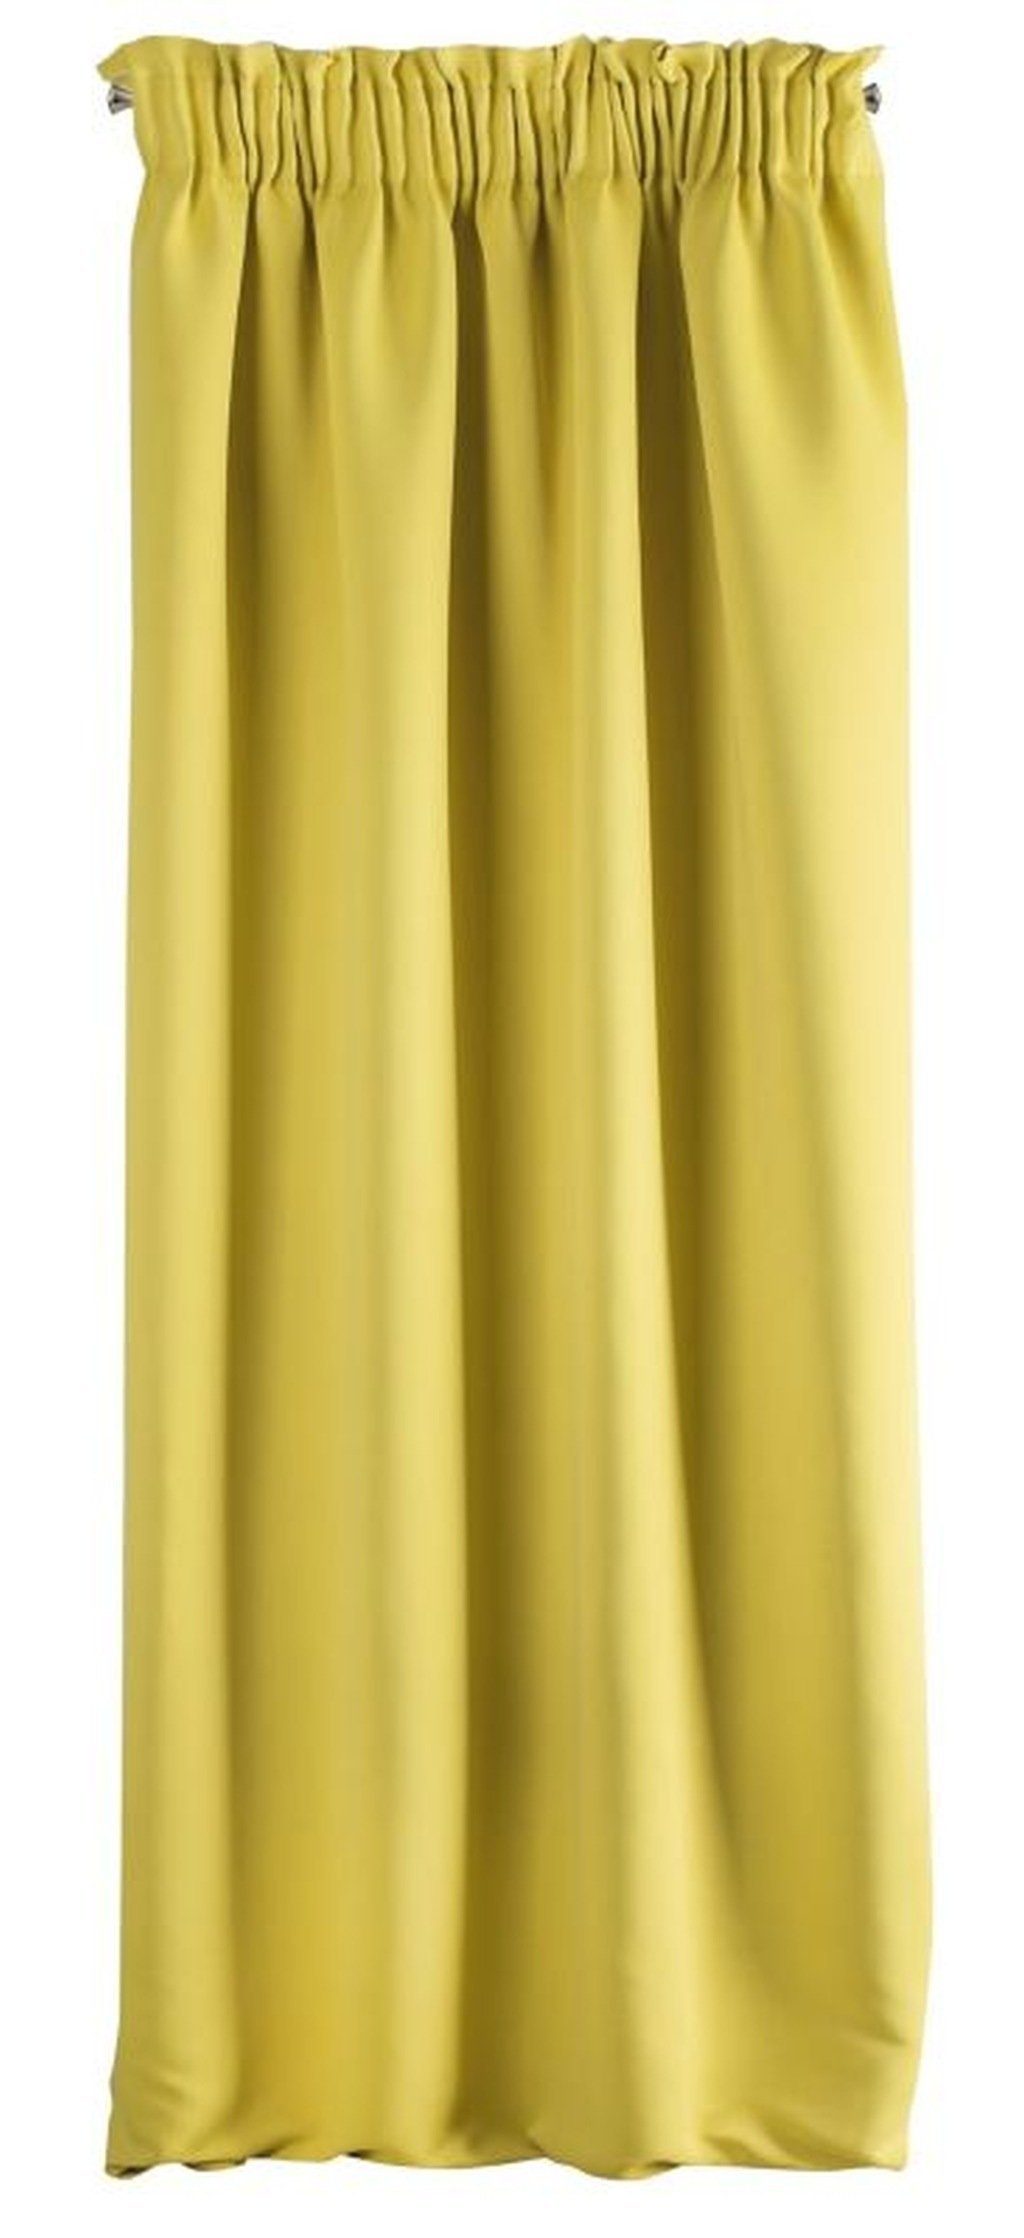 Vorhang Vorhang Kräuselband 135x270cm Stück), Verdunkelung Zitrone (2 Mariall, Gelb Kräuselband Hochwertig 